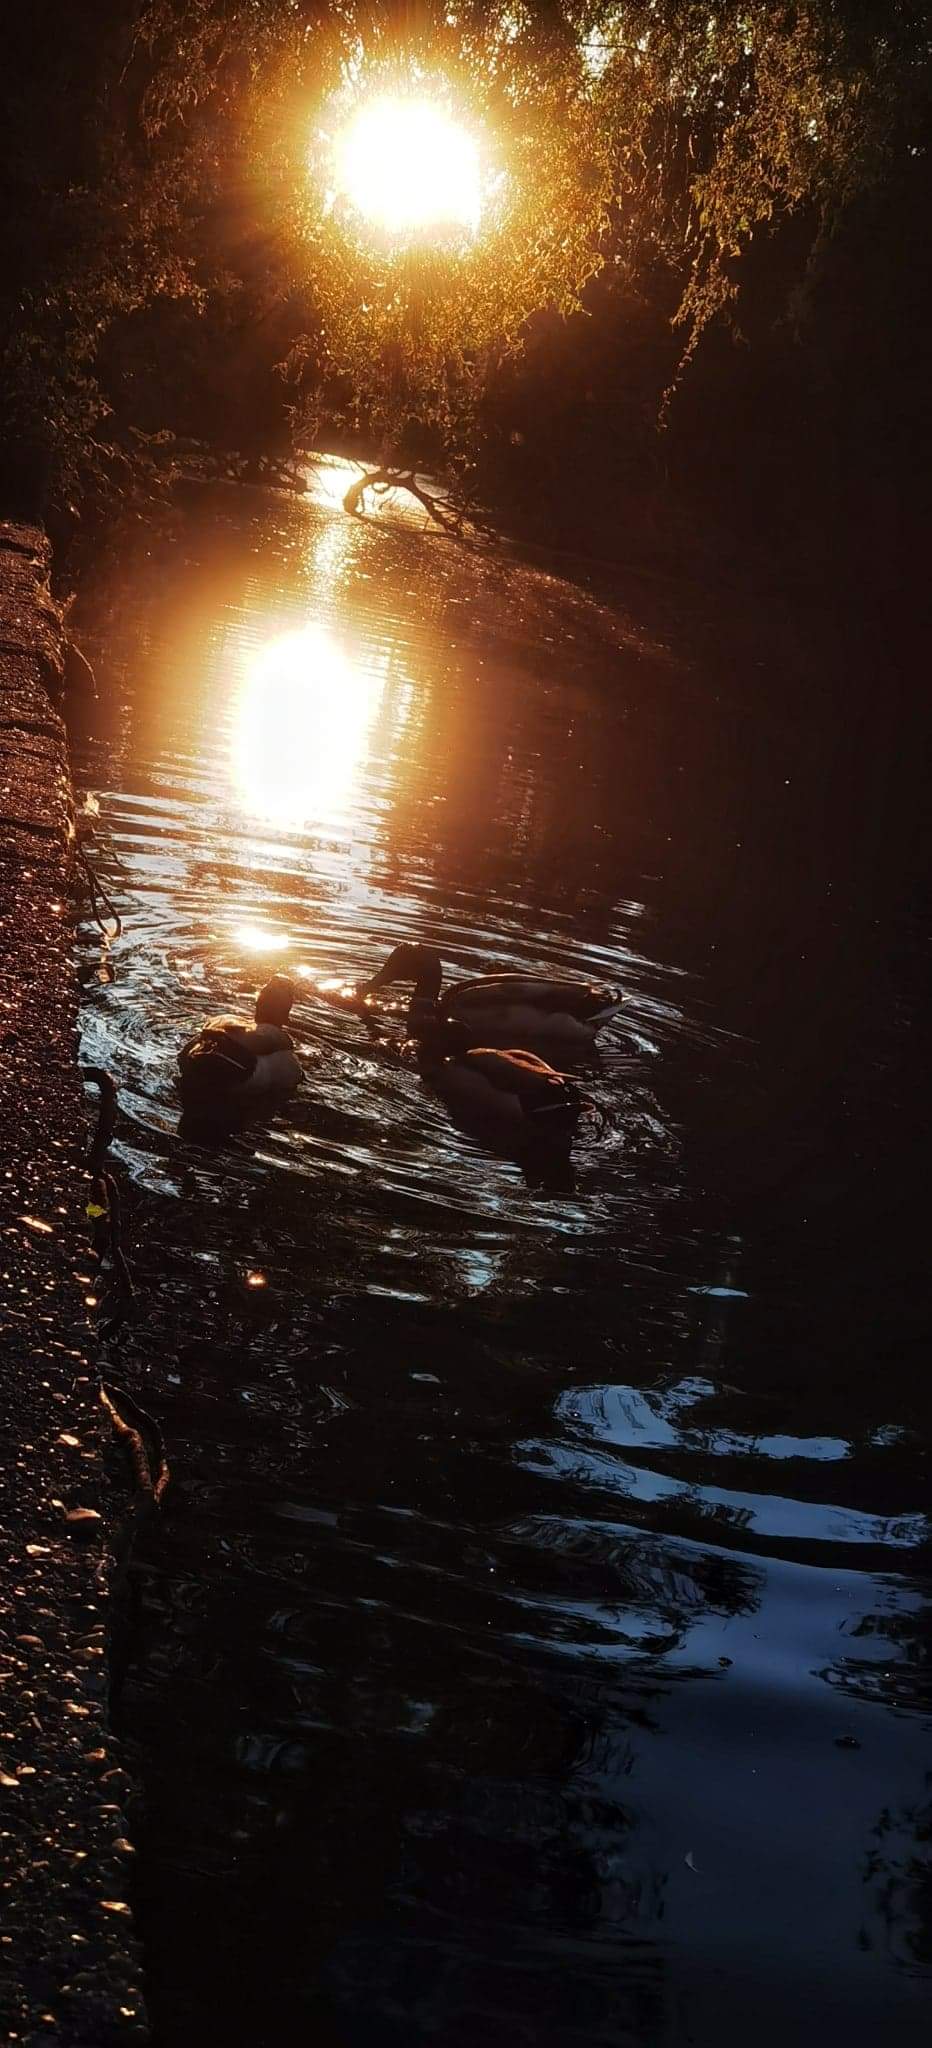 Three ducks on a pond in the sun